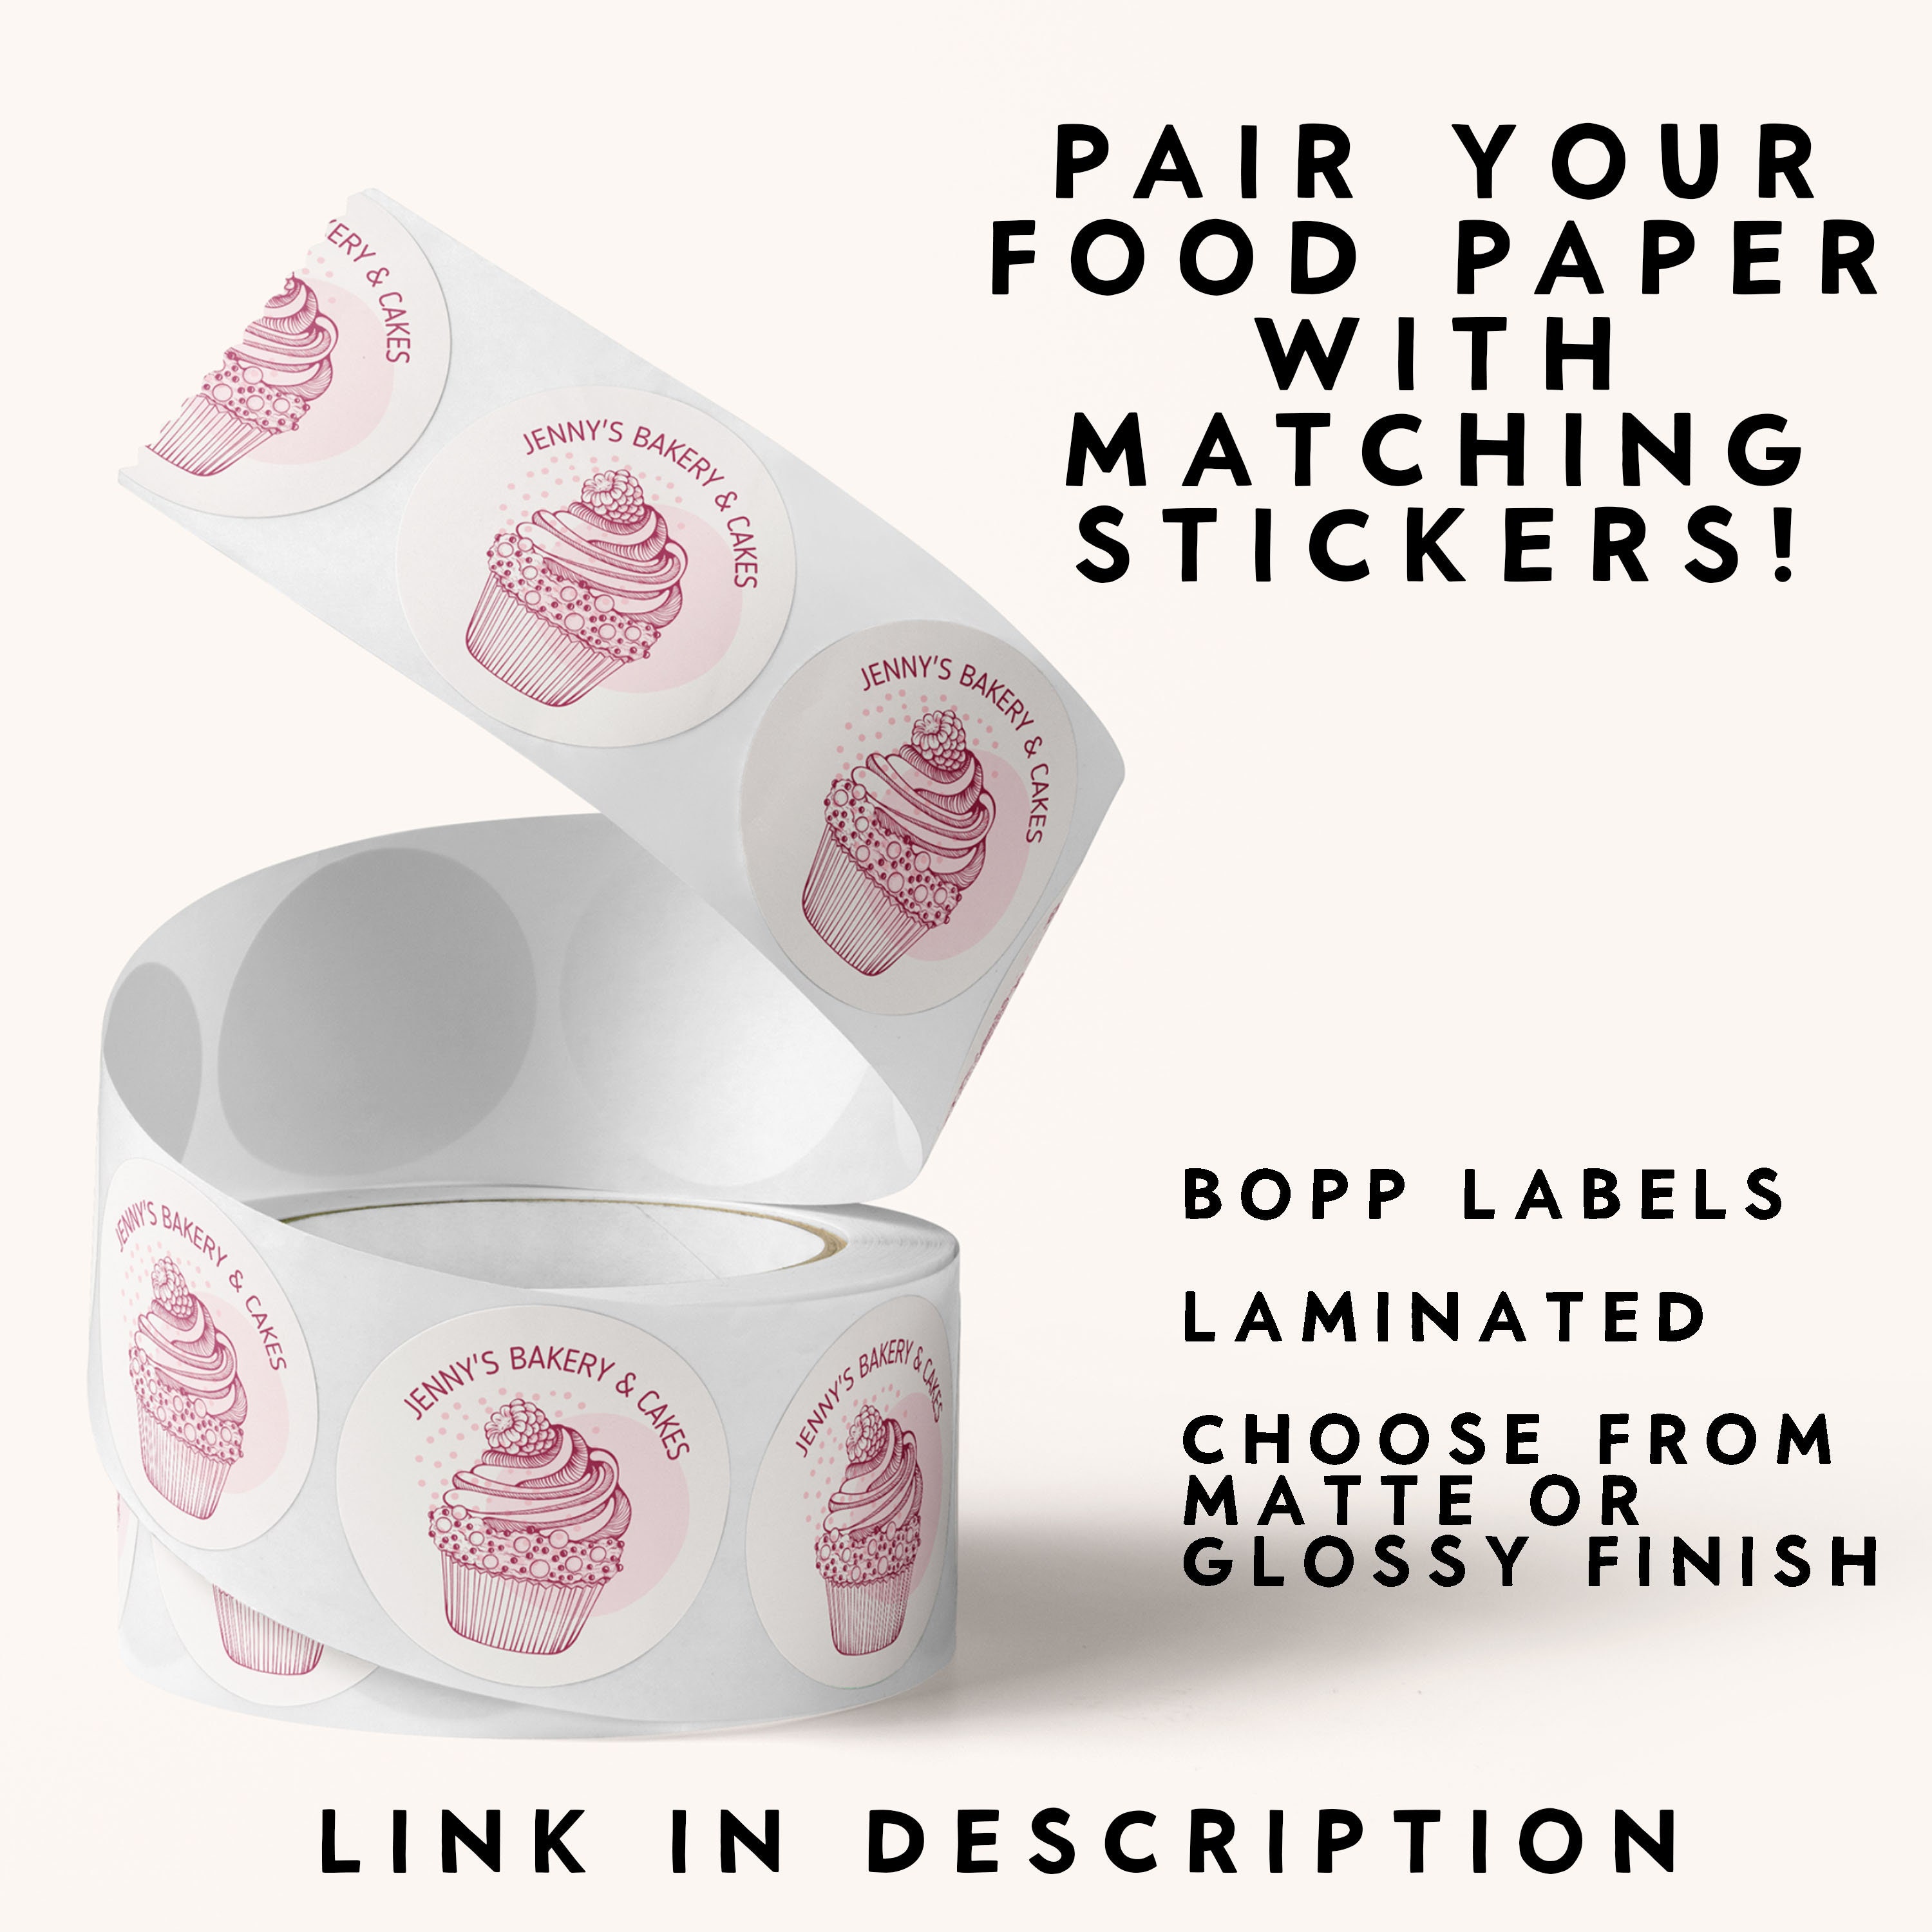 CUSTOM Stickers Roll, Custom Logo Stickers, Custom Label Roll, Personalized  Label Roll, Business Label Roll, Custom Product Label Roll 